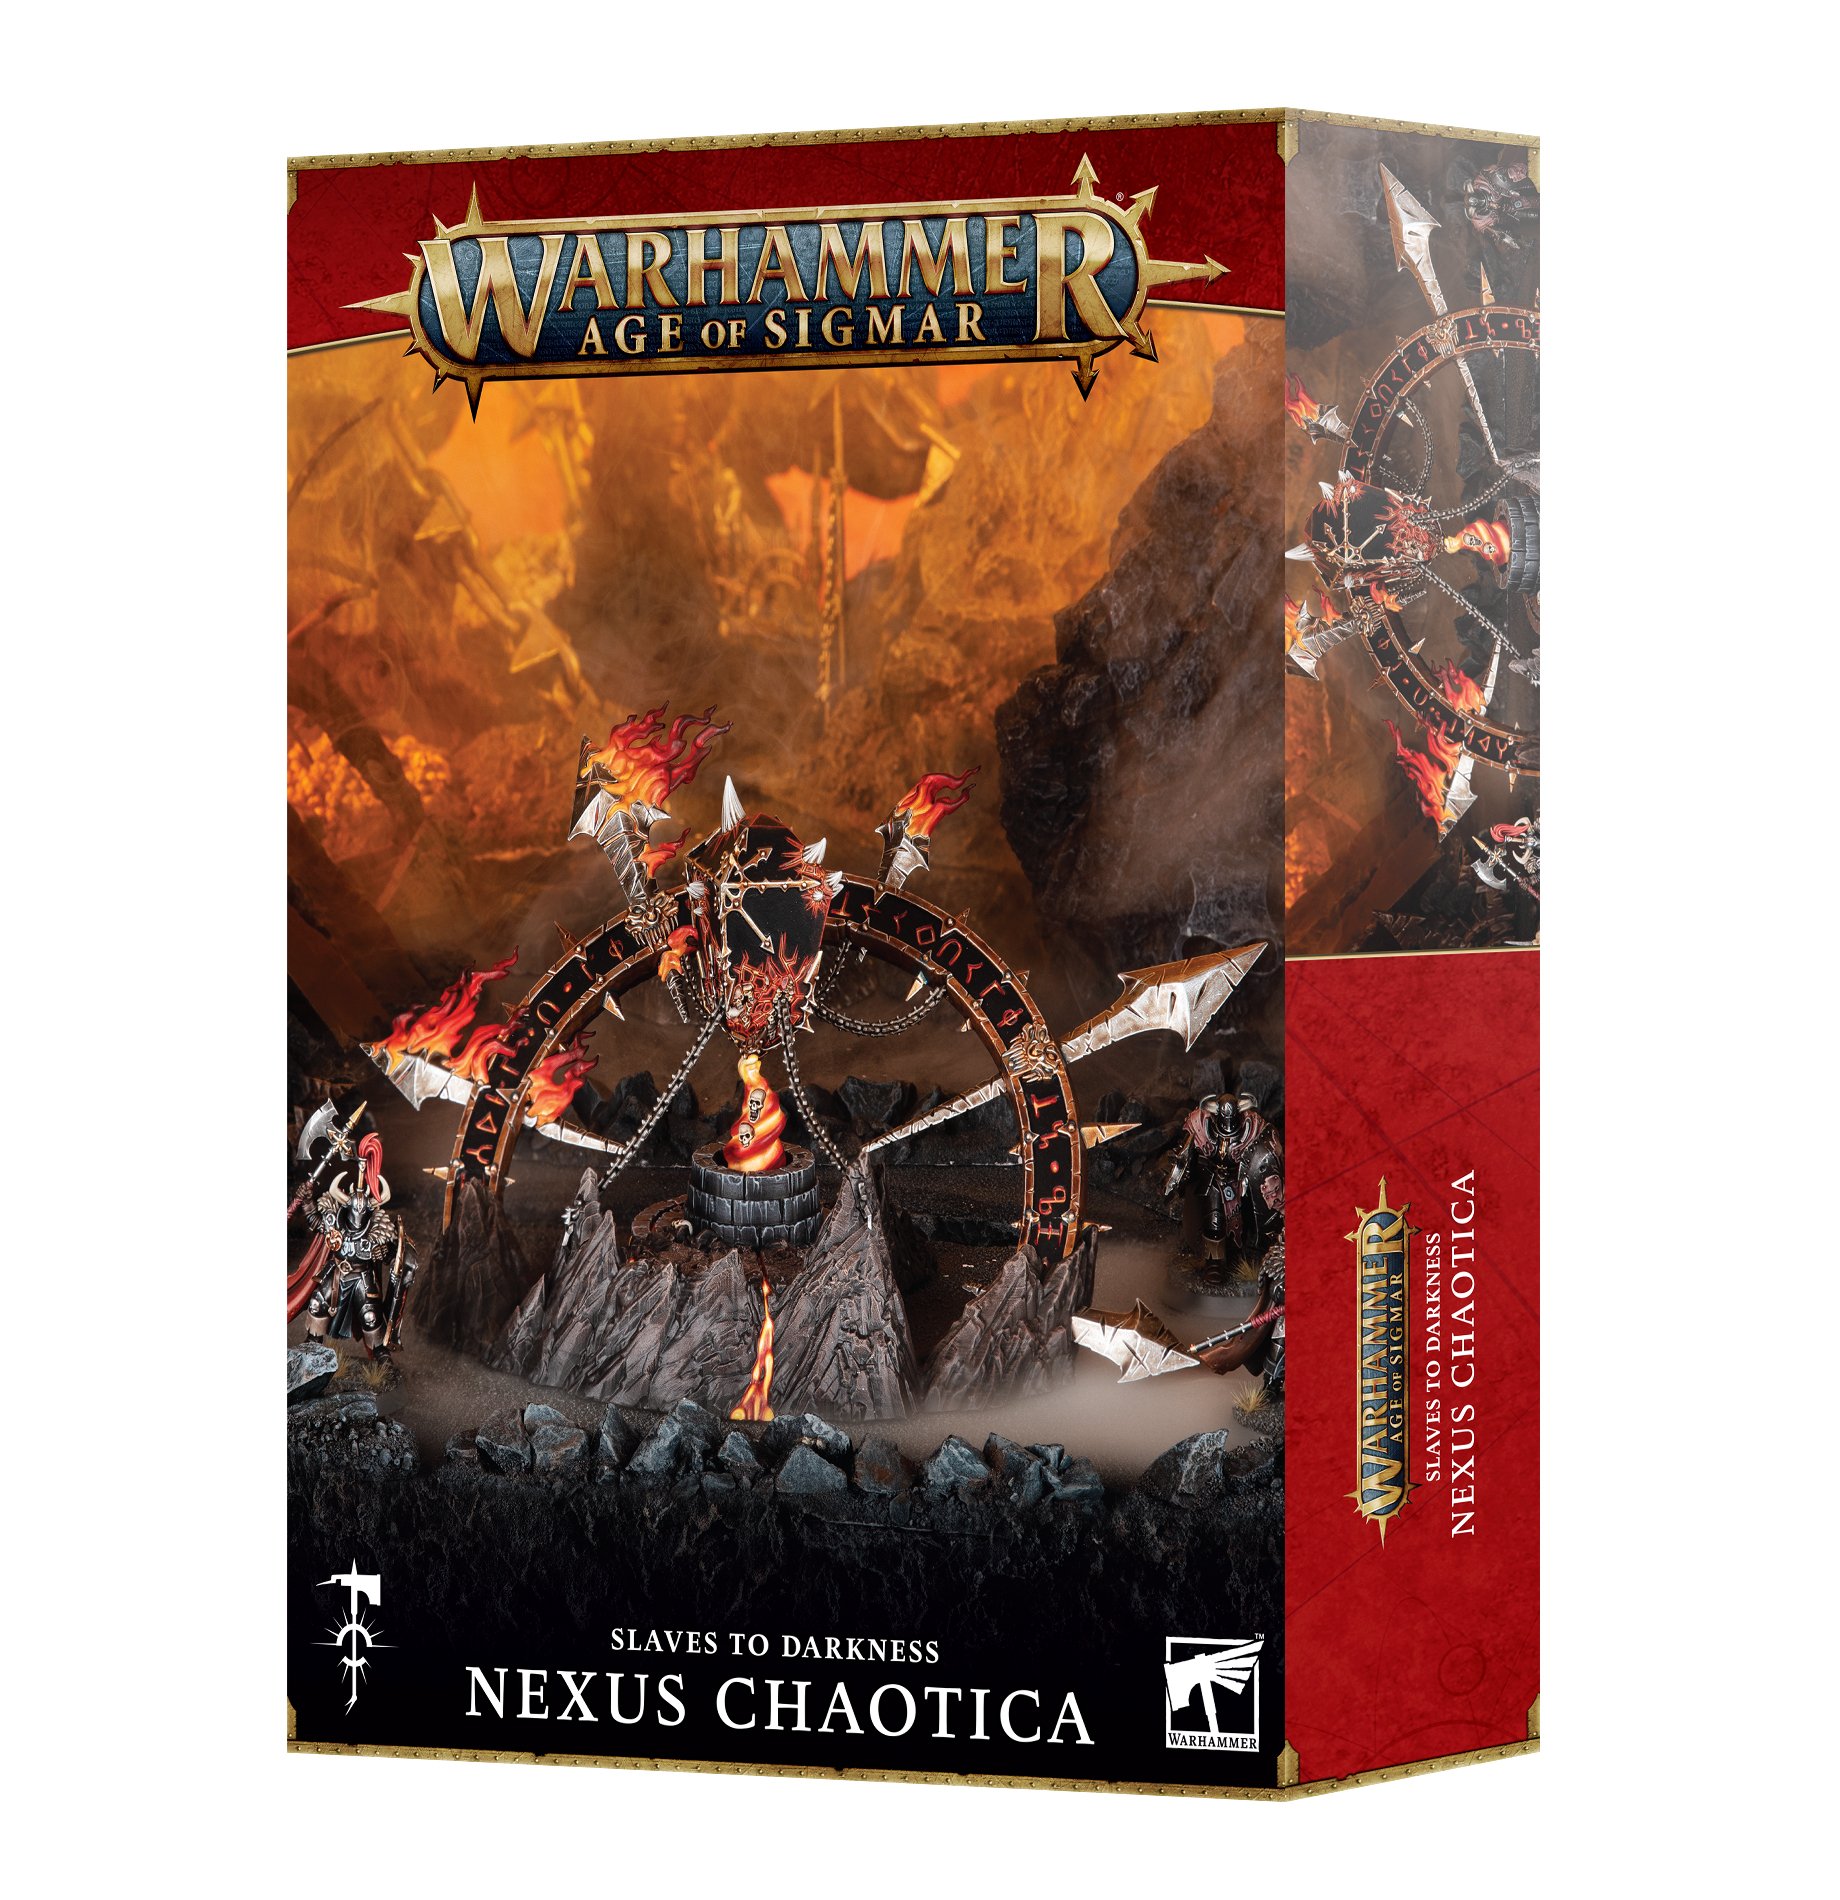 nexus chaotica box